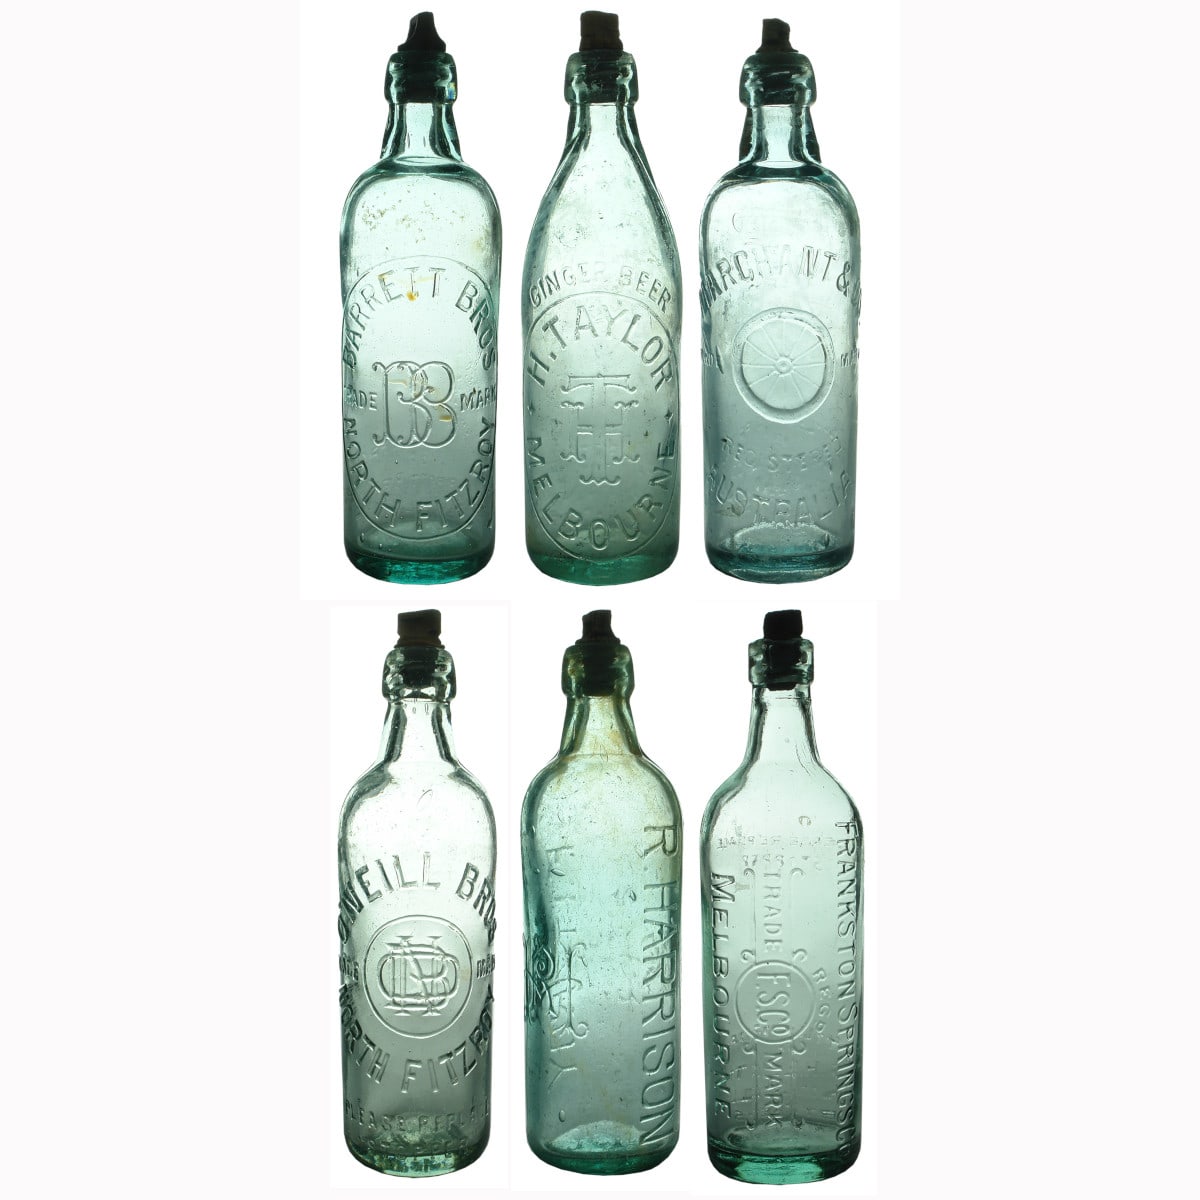 Six Internal Thread Bottles: Barrett; Taylor; Marchant; O'Neill; Harrison; Frankston Springs.